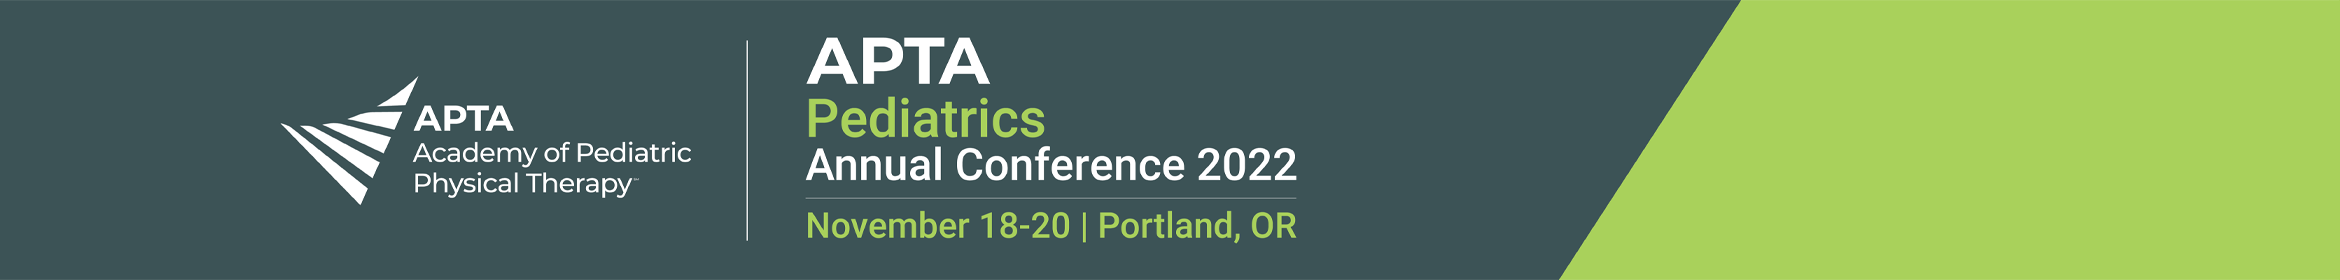 2023 APTA Pediatrics Annual Conference Main banner